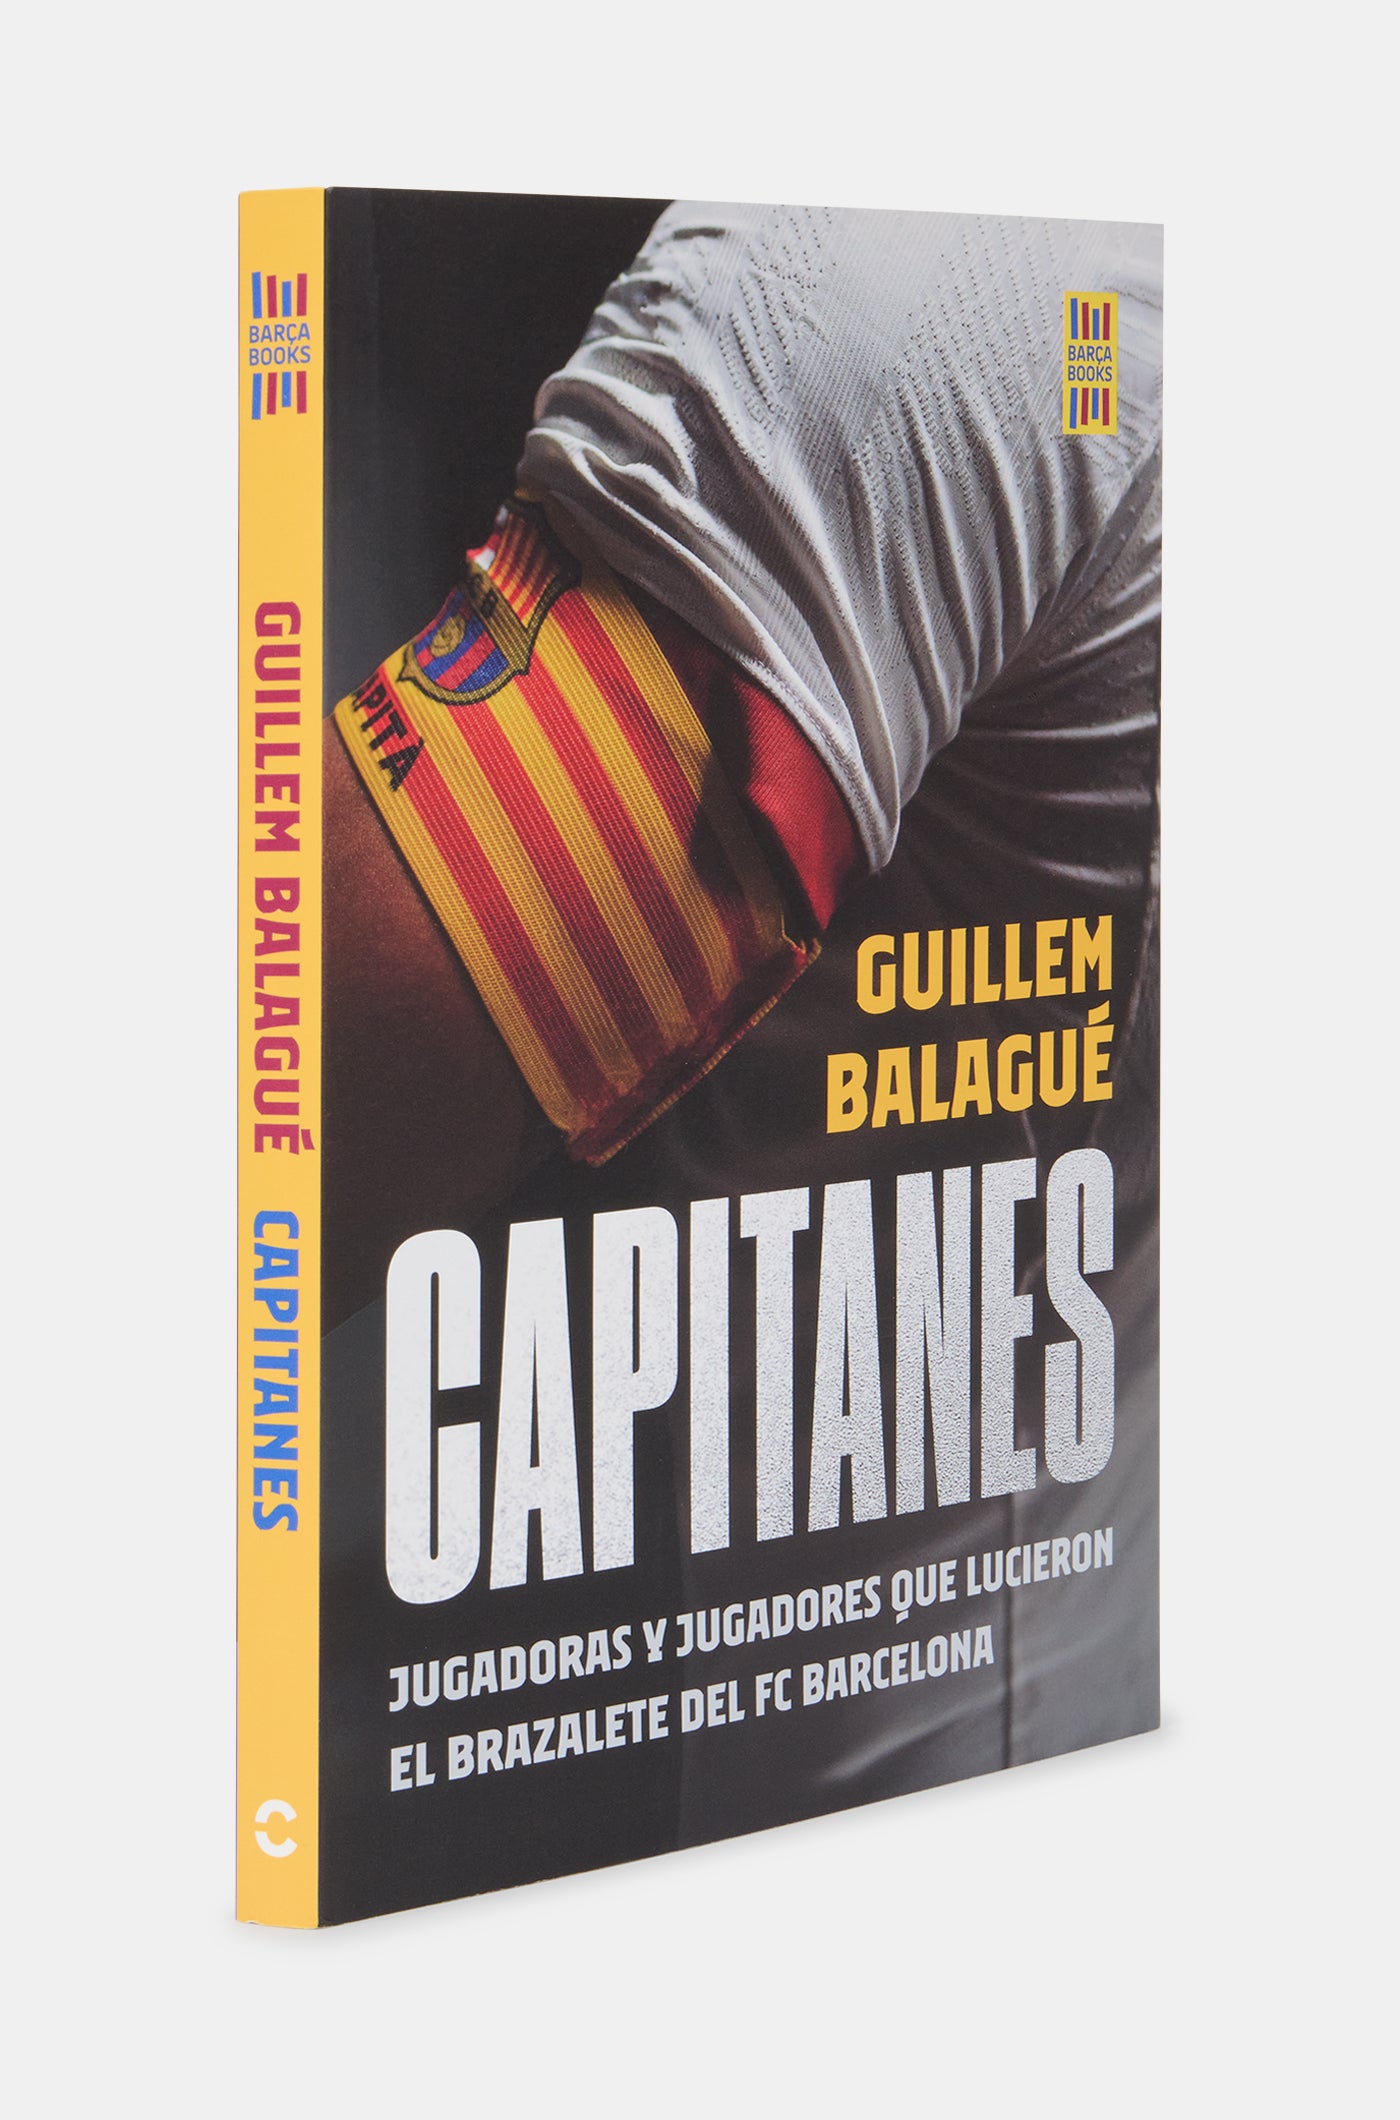 Book "Capitanes"